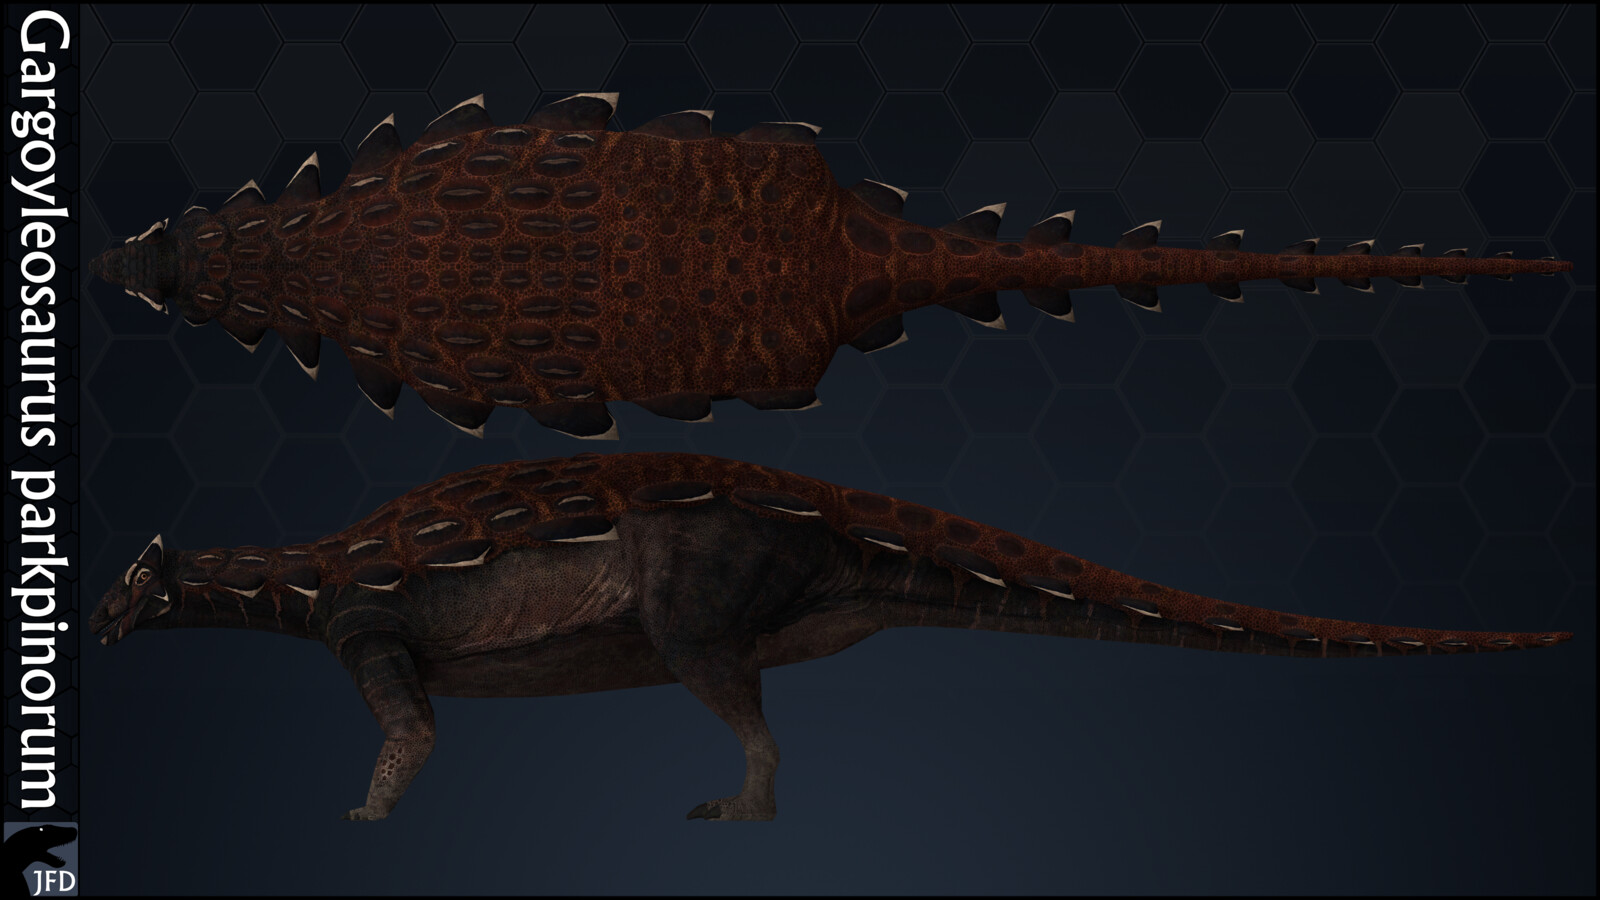 Gargoyleosaurus parkpinorum orthographic multi-view render.